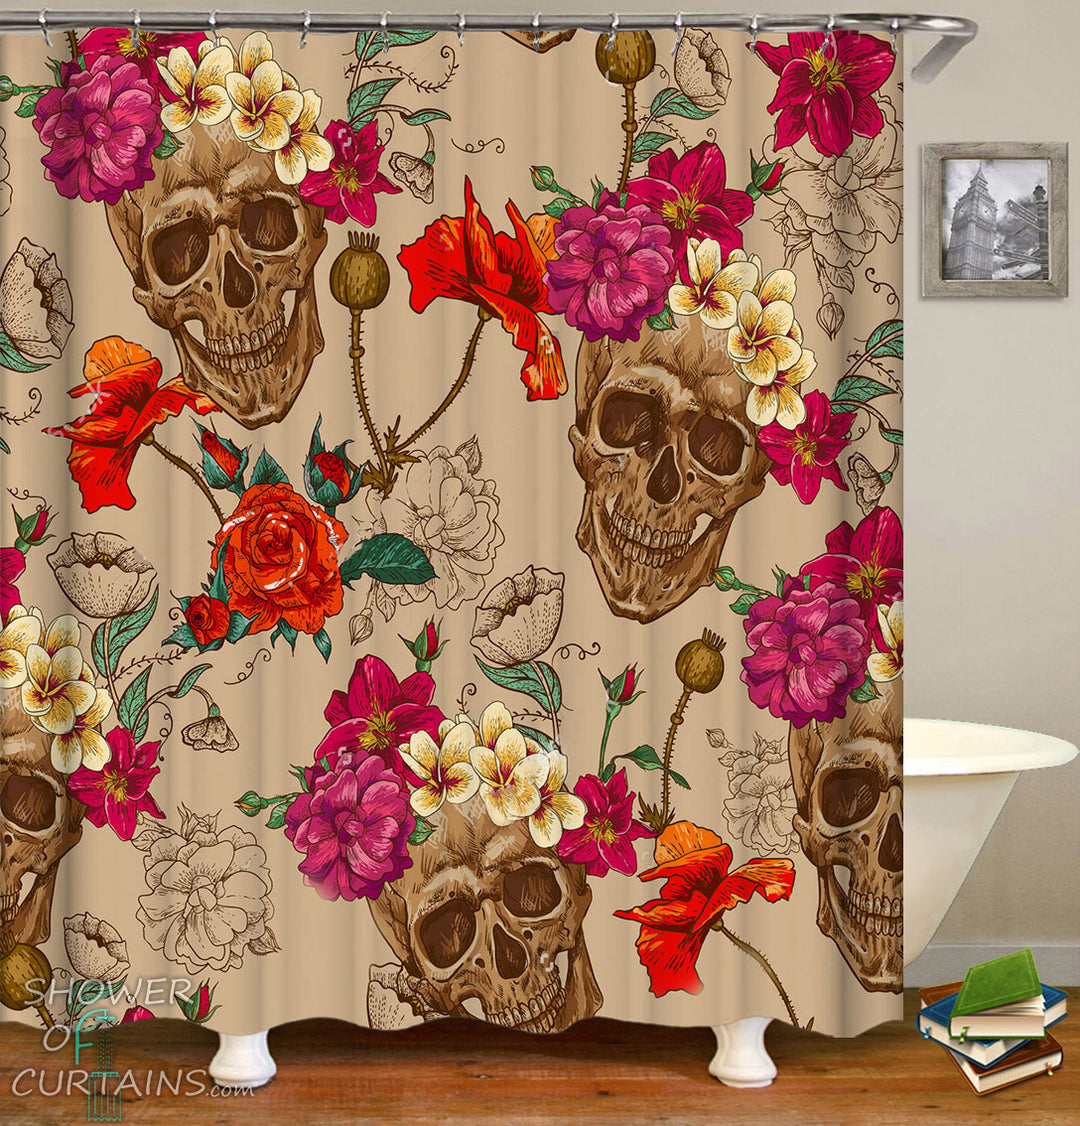 Skull Bathroom Decor of Fresh Flowers Fit Skulls Painting Shower Curtain